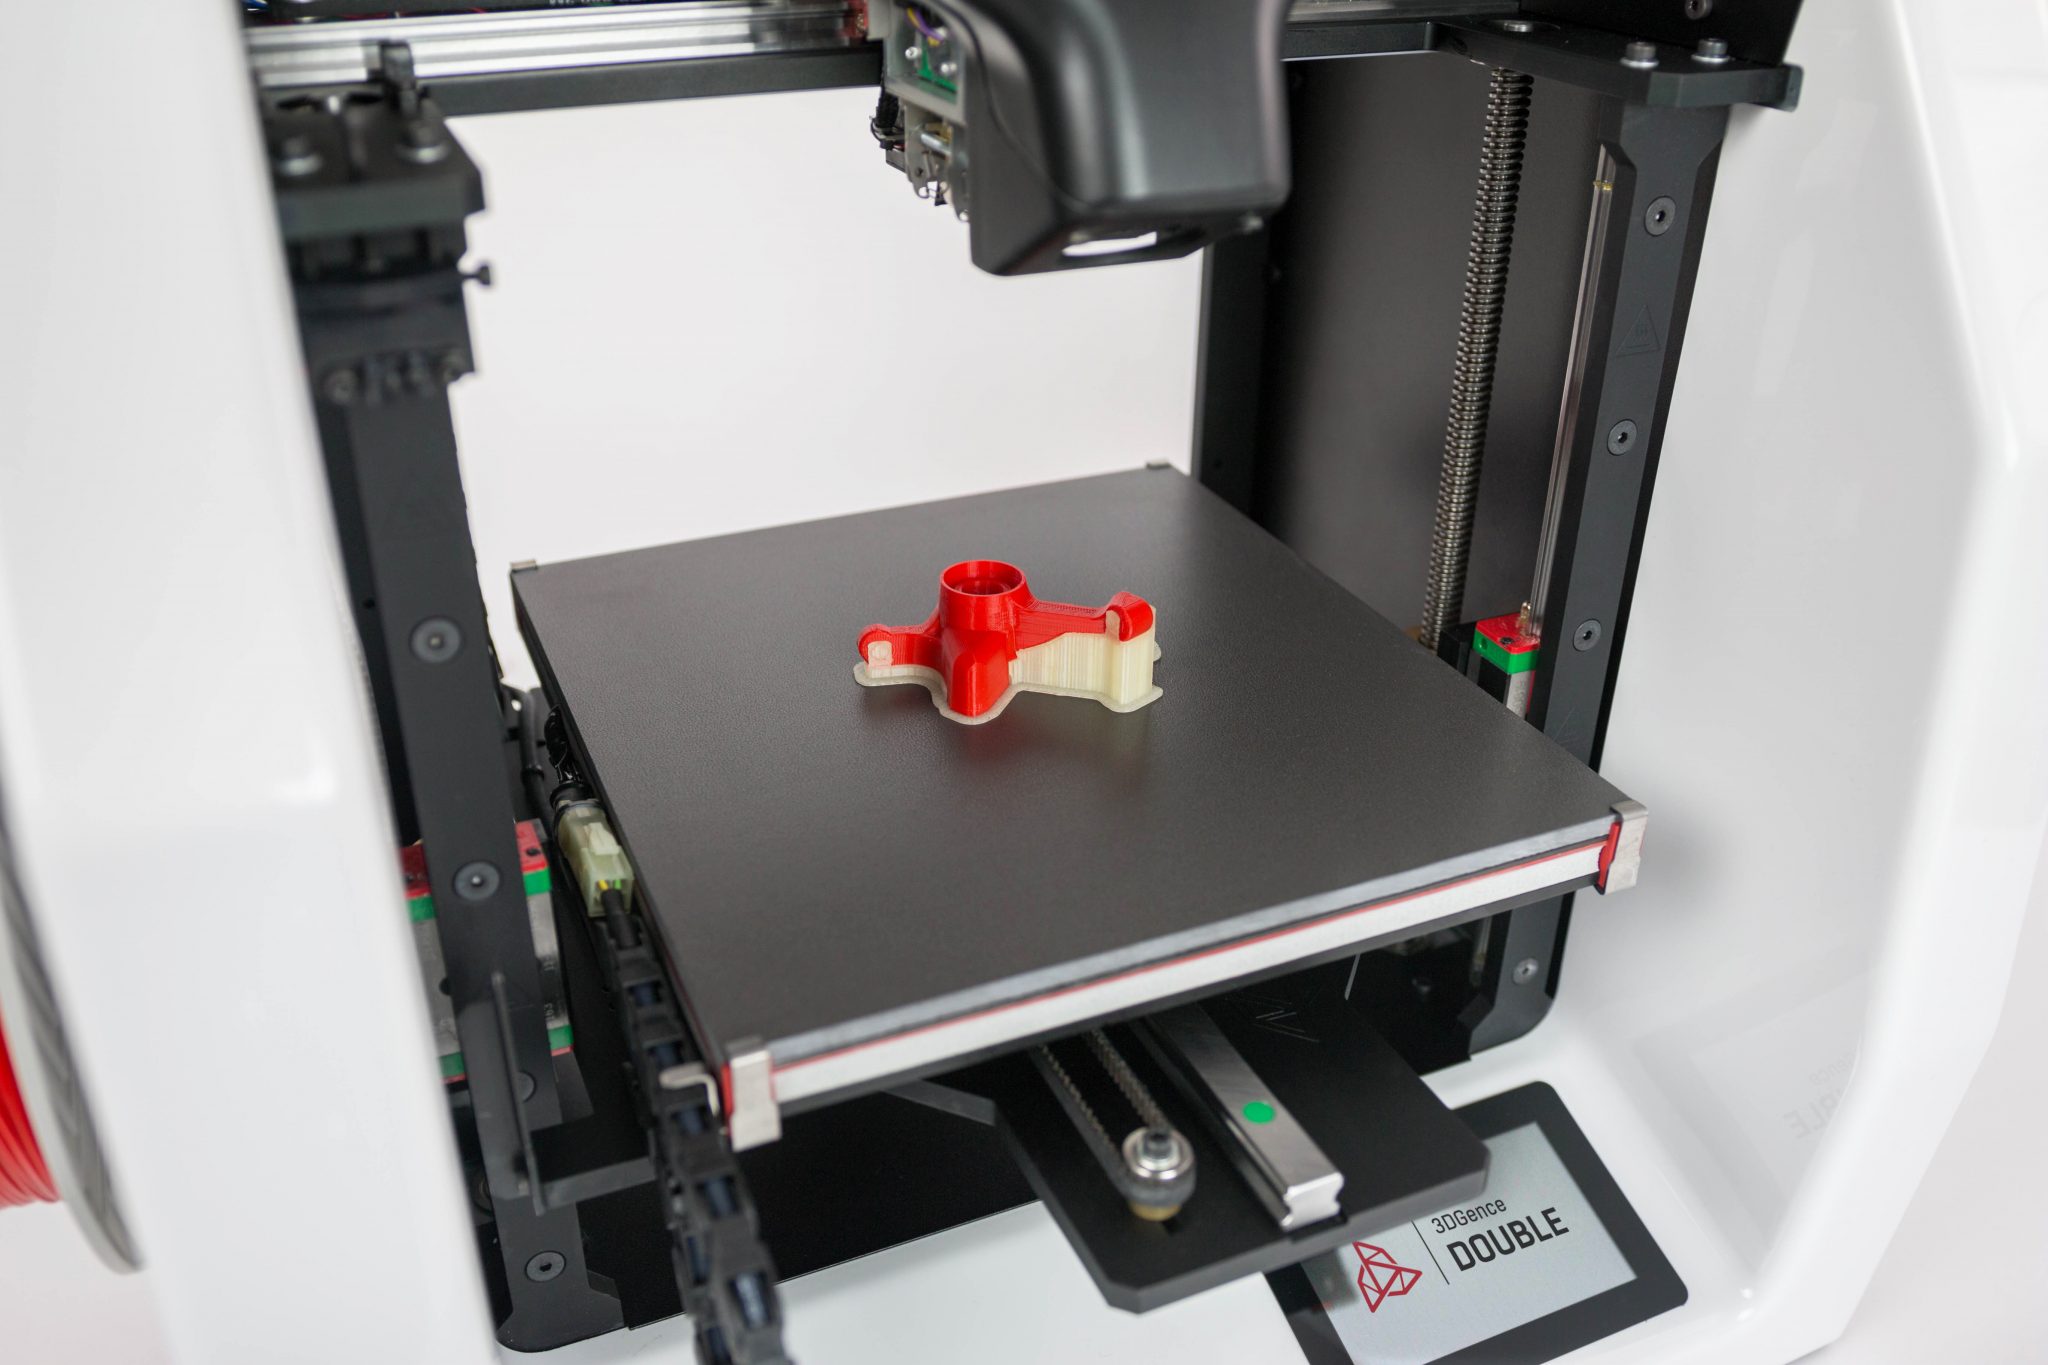 3DGence launches DOUBLE dual extrusion 3D printer - Sample Print